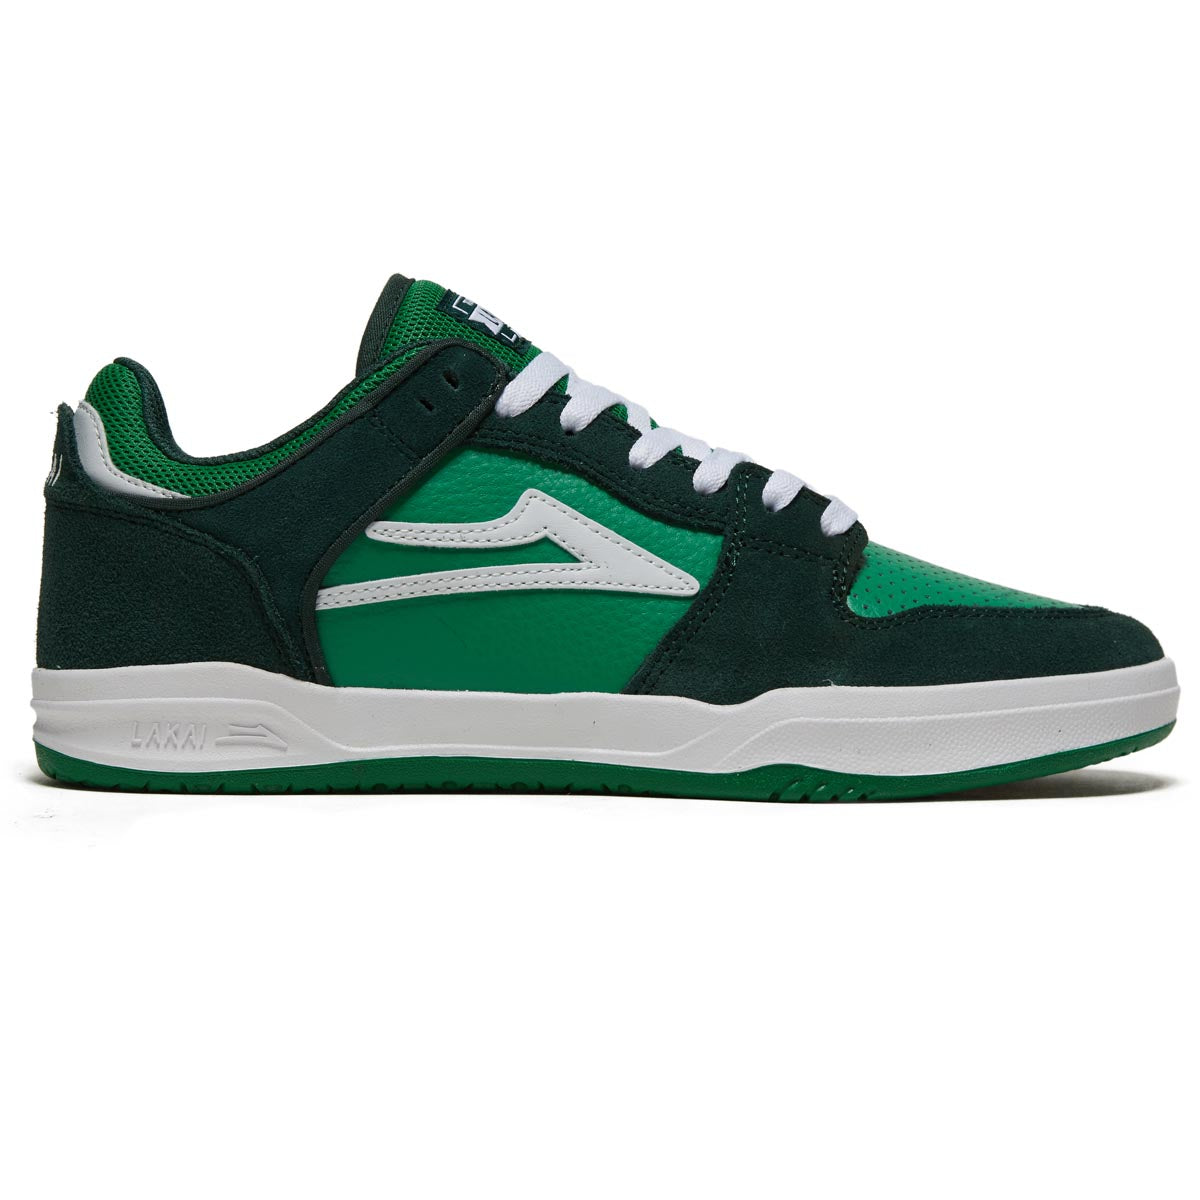 Lakai Telford Low Shoes - Green Suede image 1